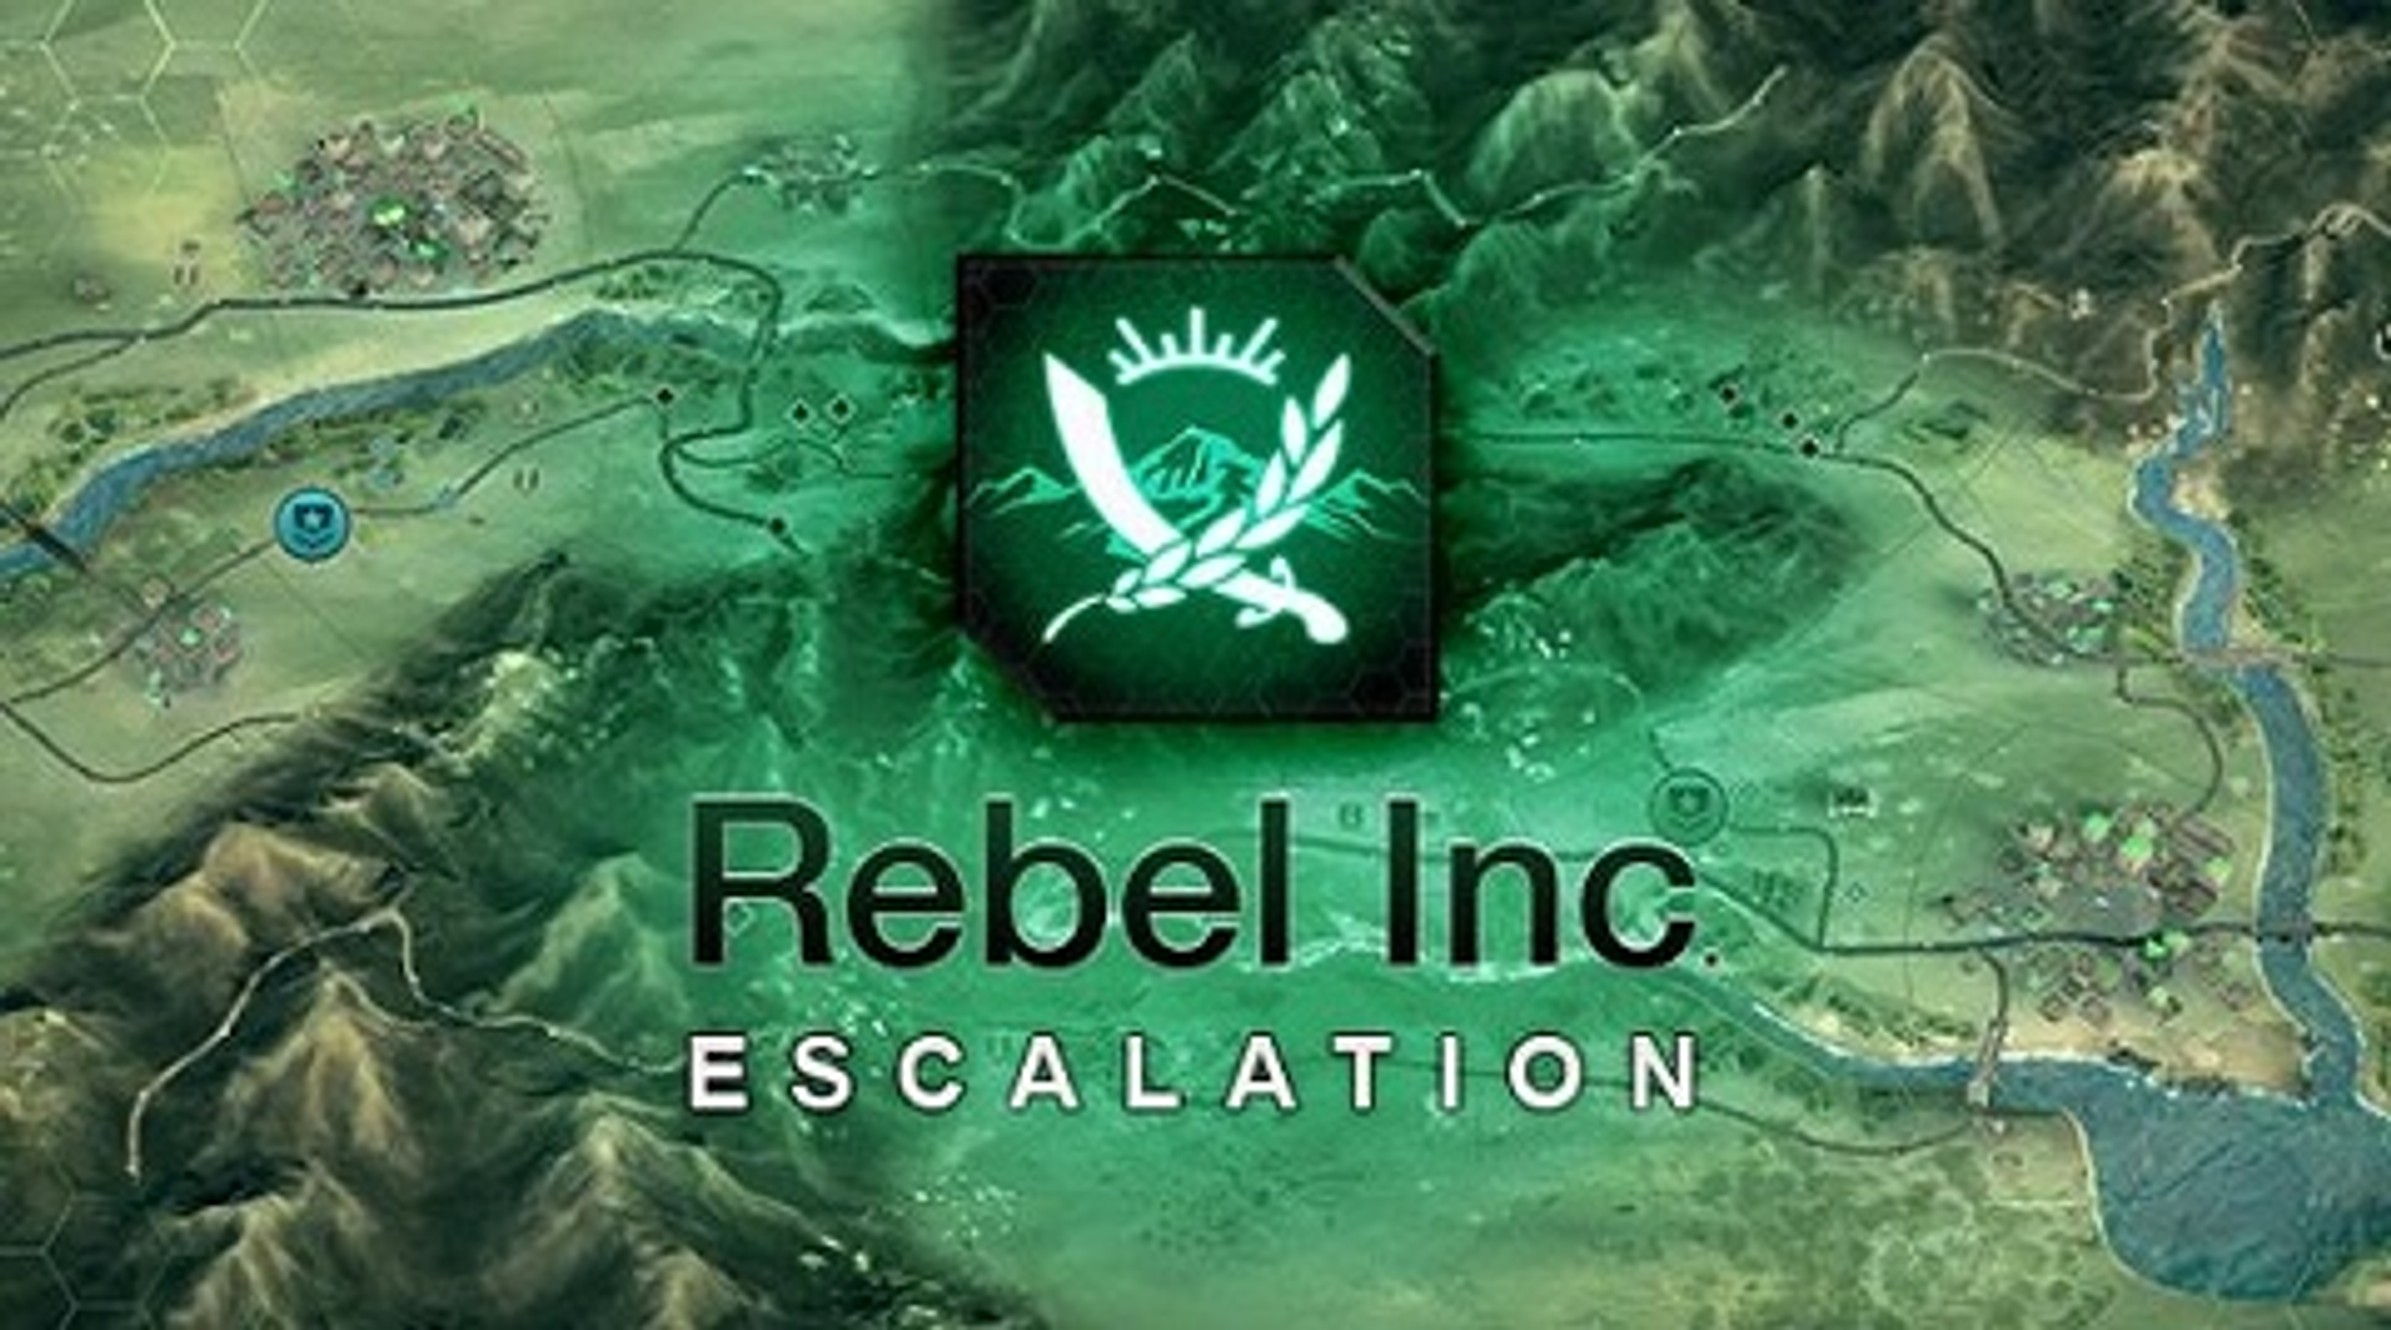 rebel inc escalation unlocks